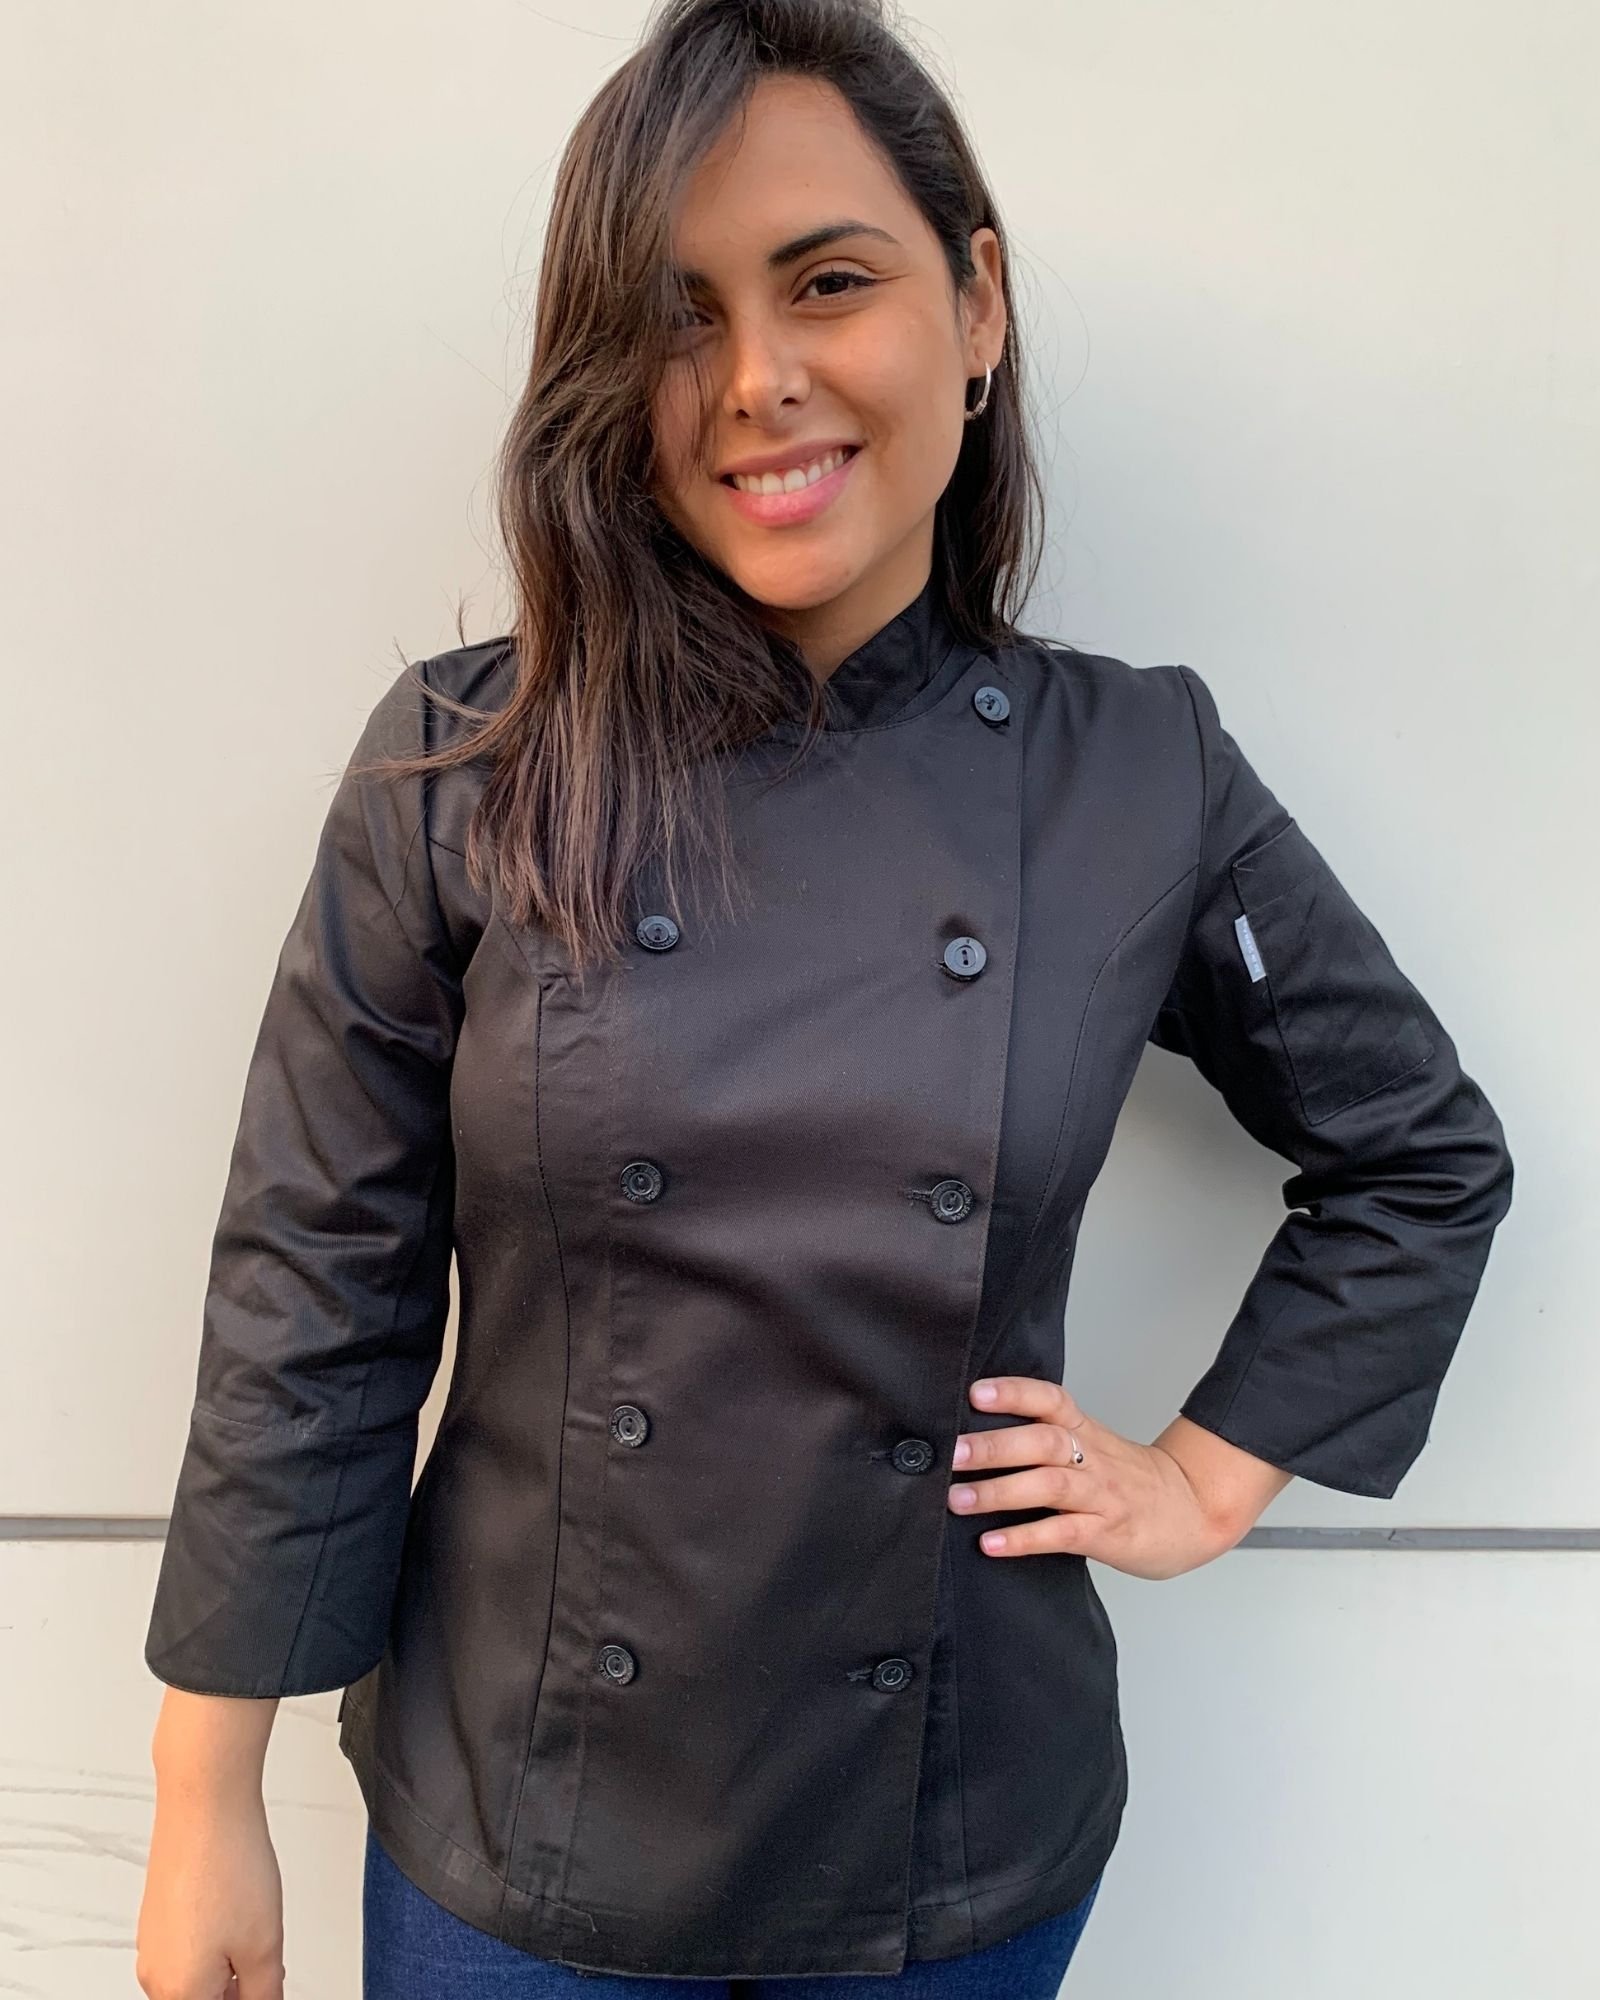 Julín Serra - Chaqueta Chef Mujer Cruzada